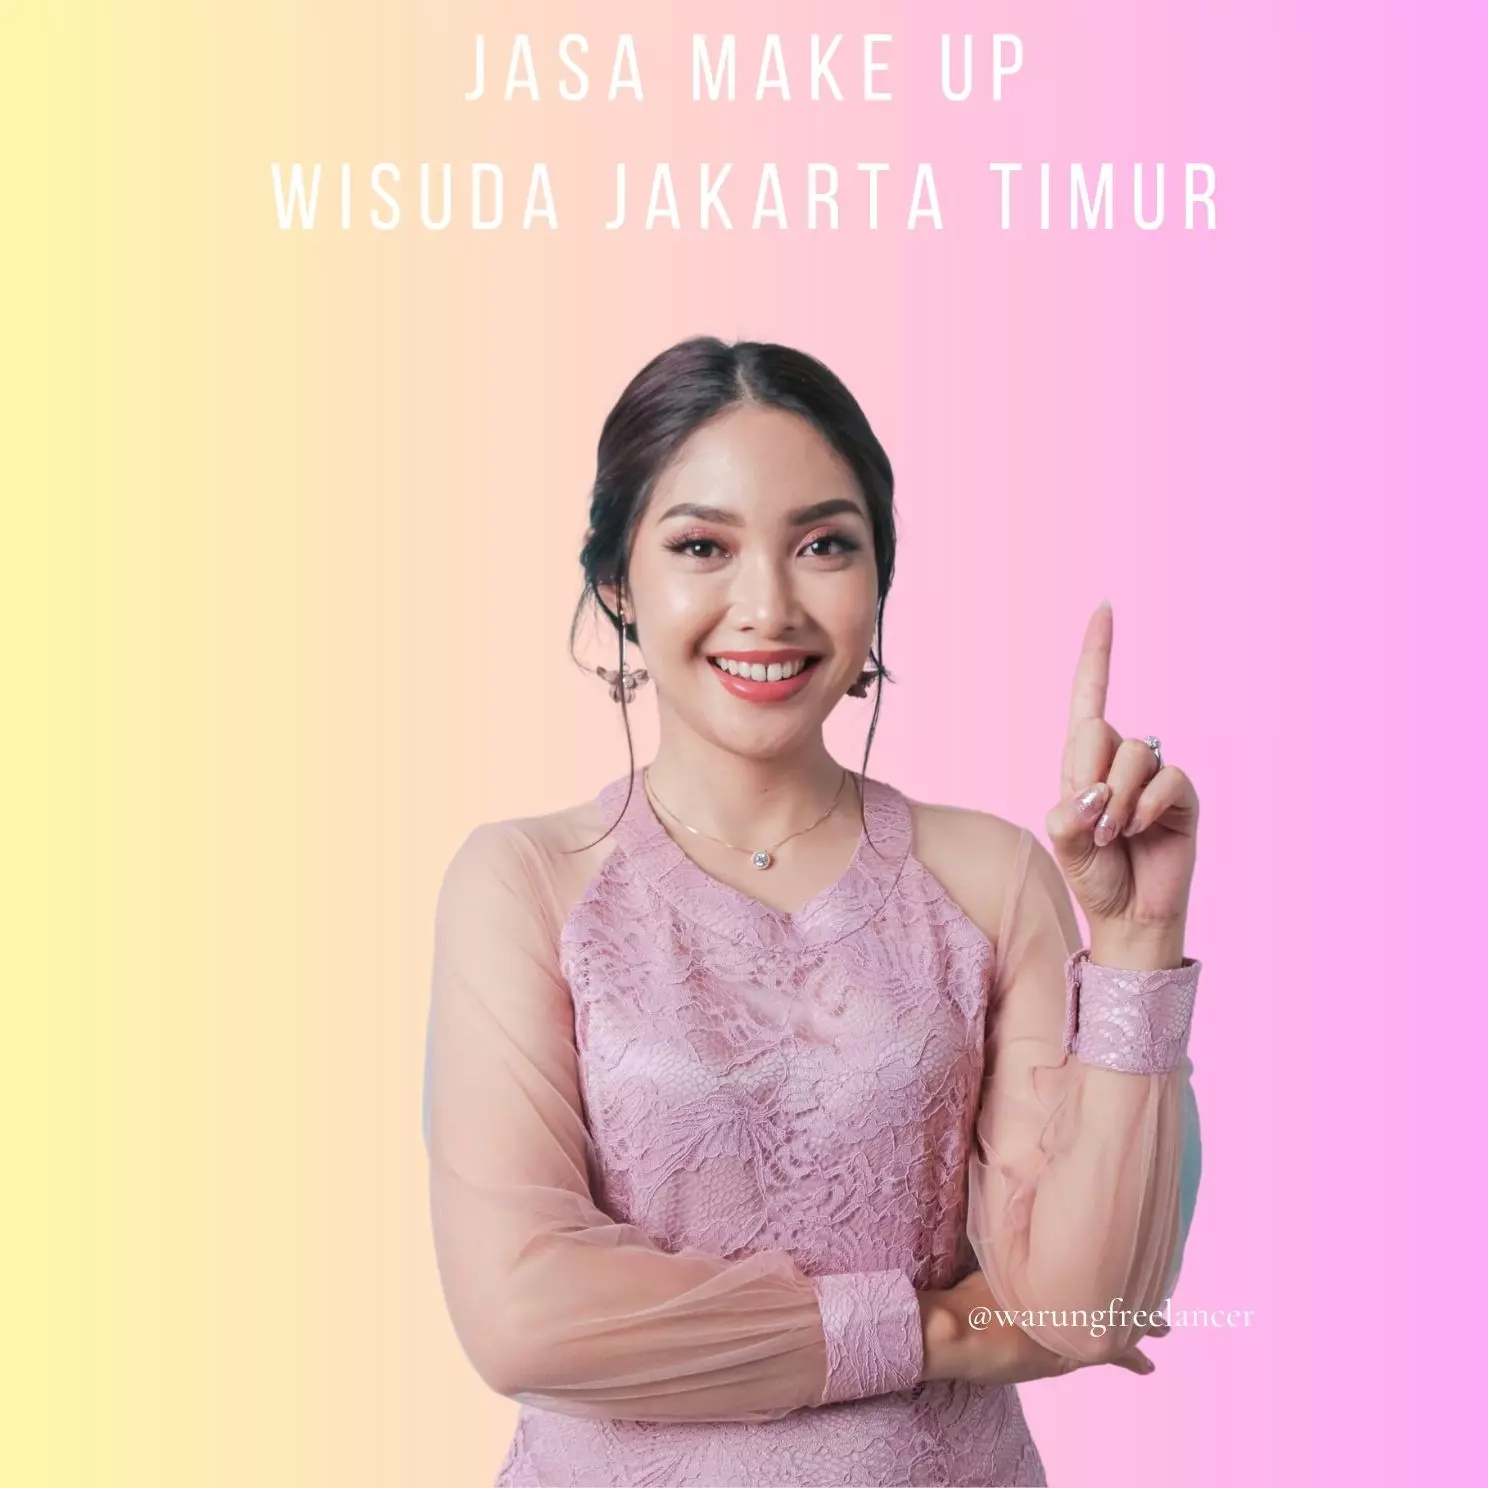 Jasa Make Up Wisuda Jakarta Timur